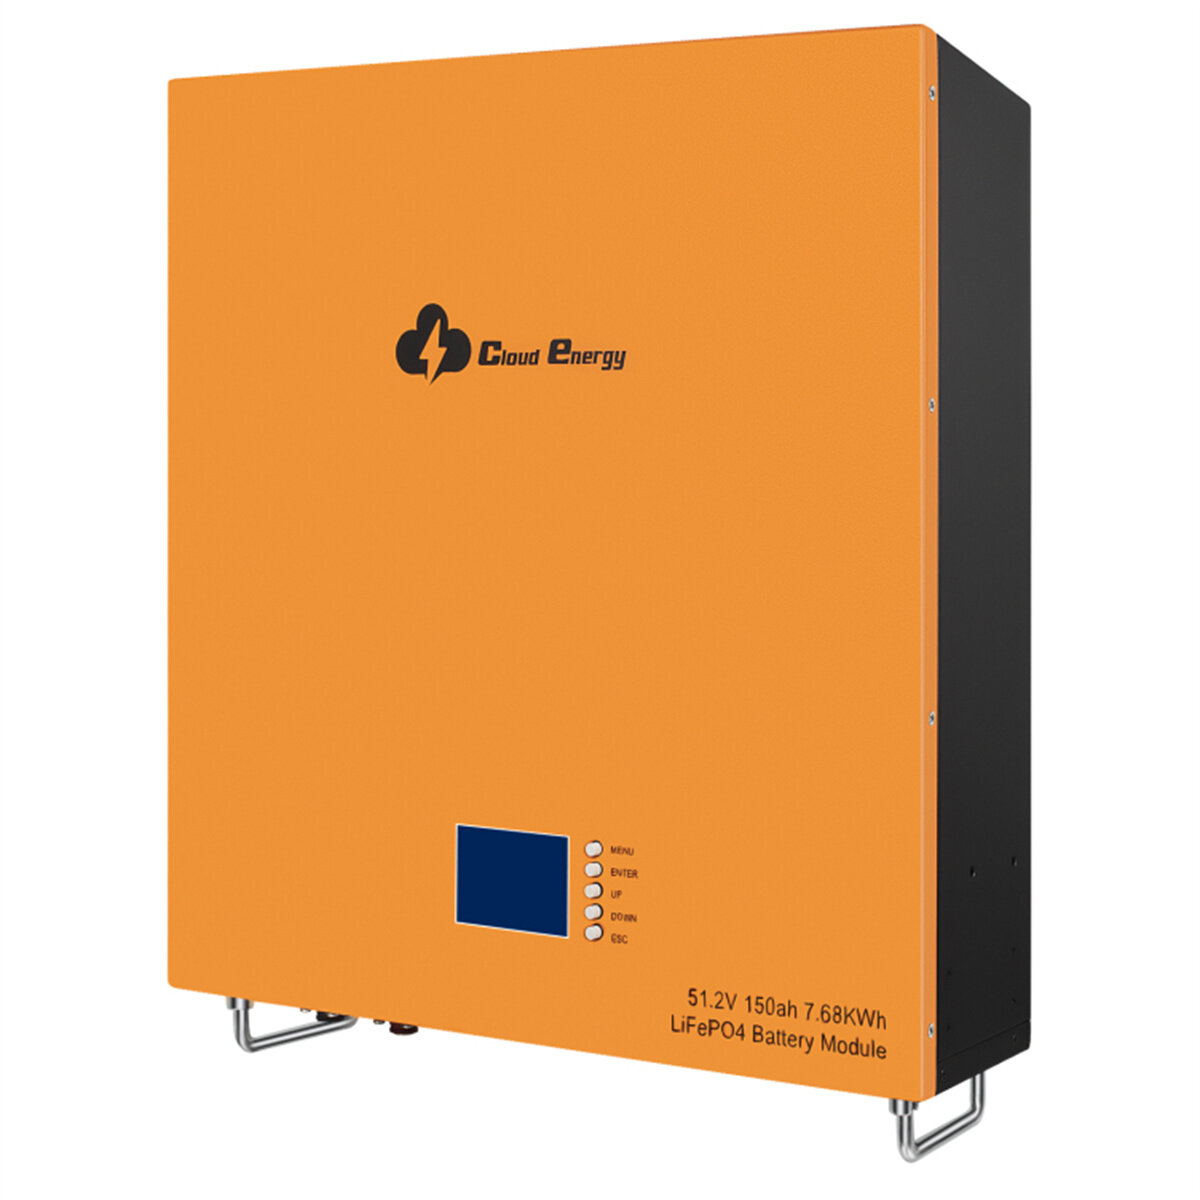 [EU Direct] Cloudenergy 48V 150Ah 7,68KWh Batería de litio LiFePO4 montada en pared, 6000+ ciclos de vida, BMS incorporado y monitor LED, RV, power bank para almacenamiento de energía doméstica